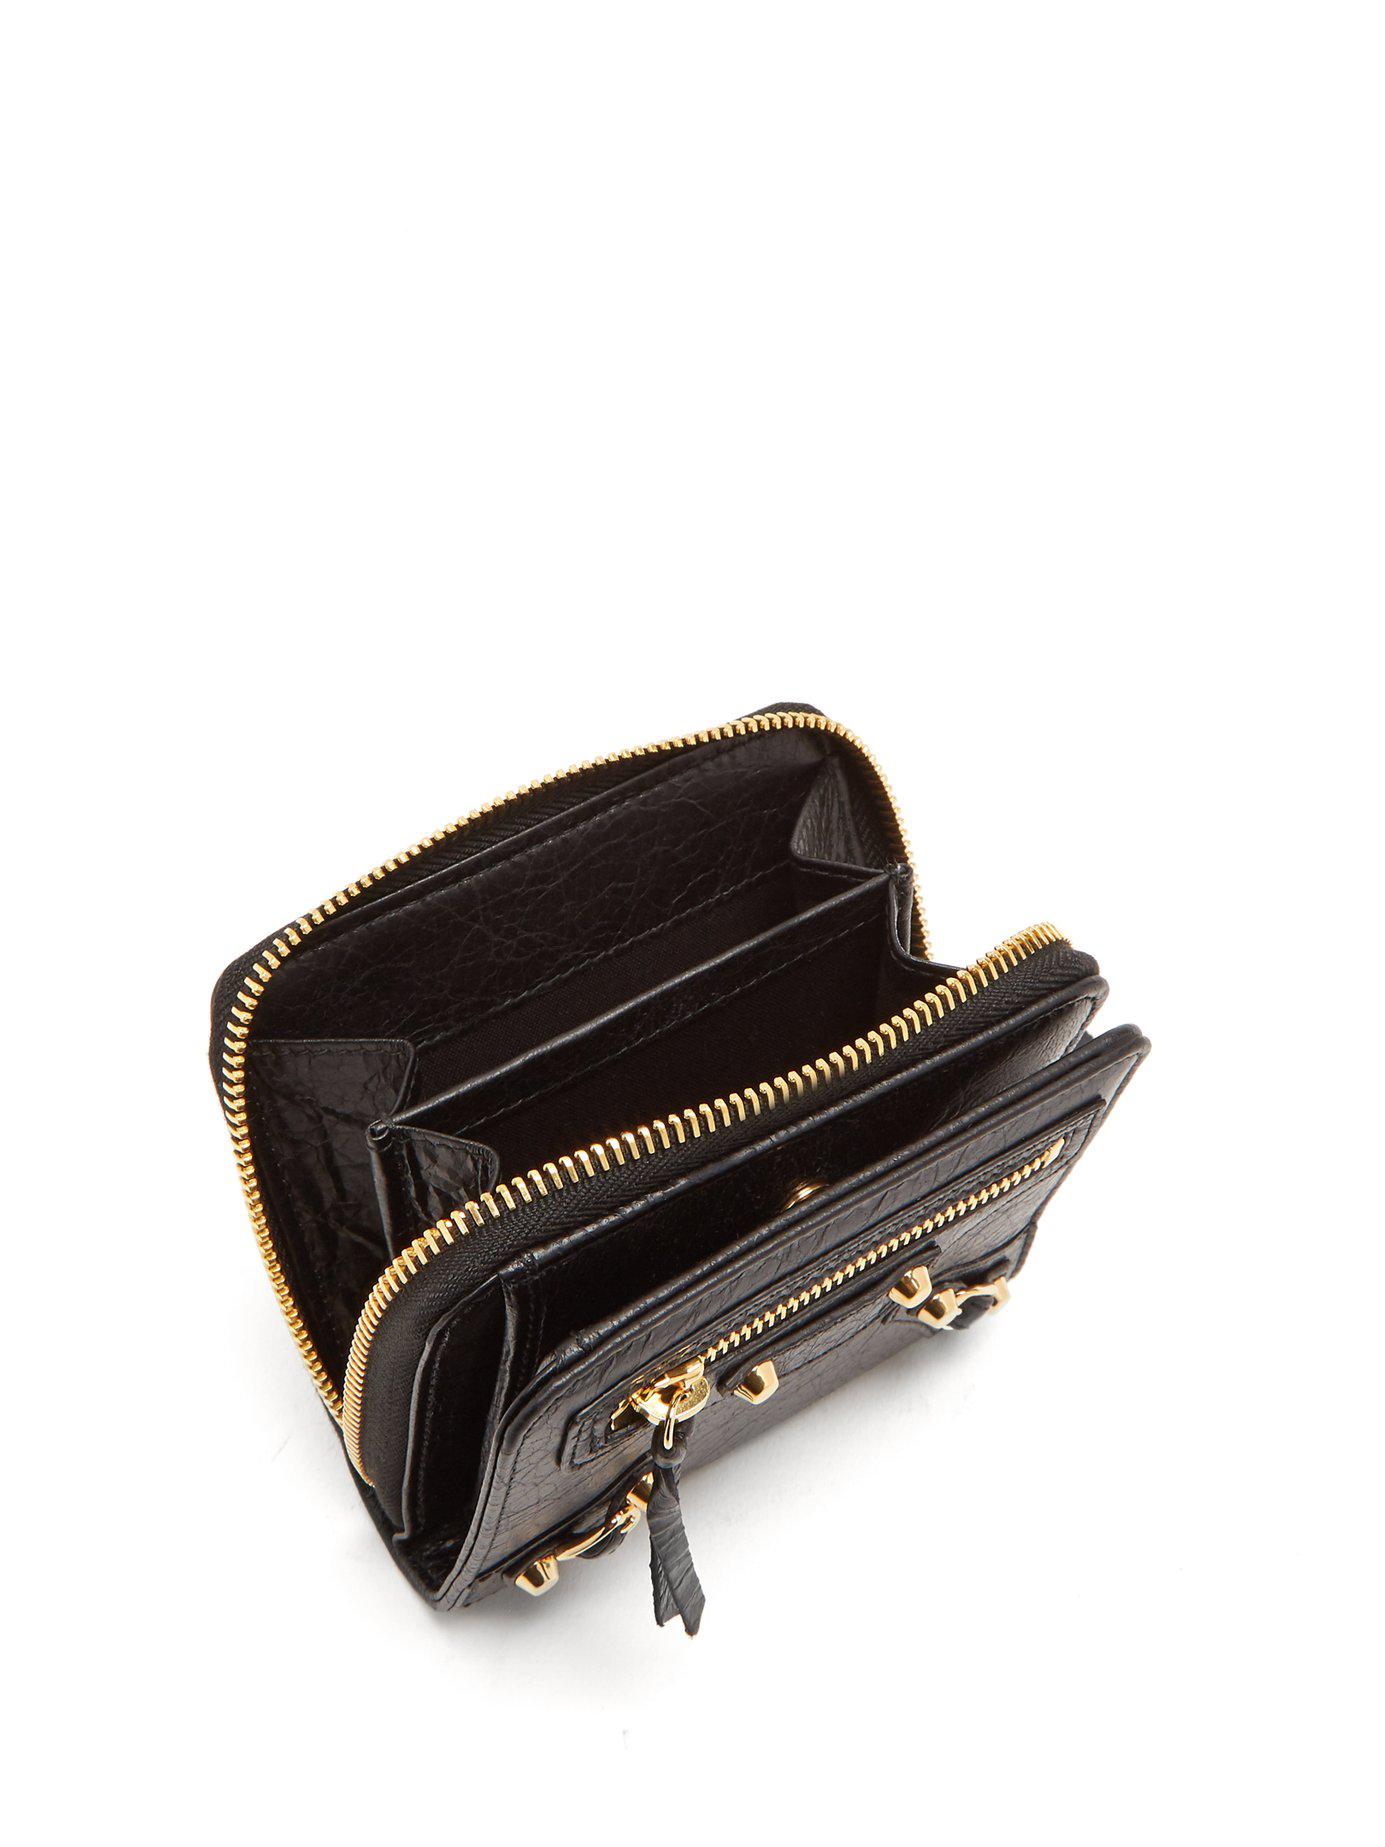 Balenciaga Classic Bi Fold Zip Around Leather Wallet in Black | Lyst